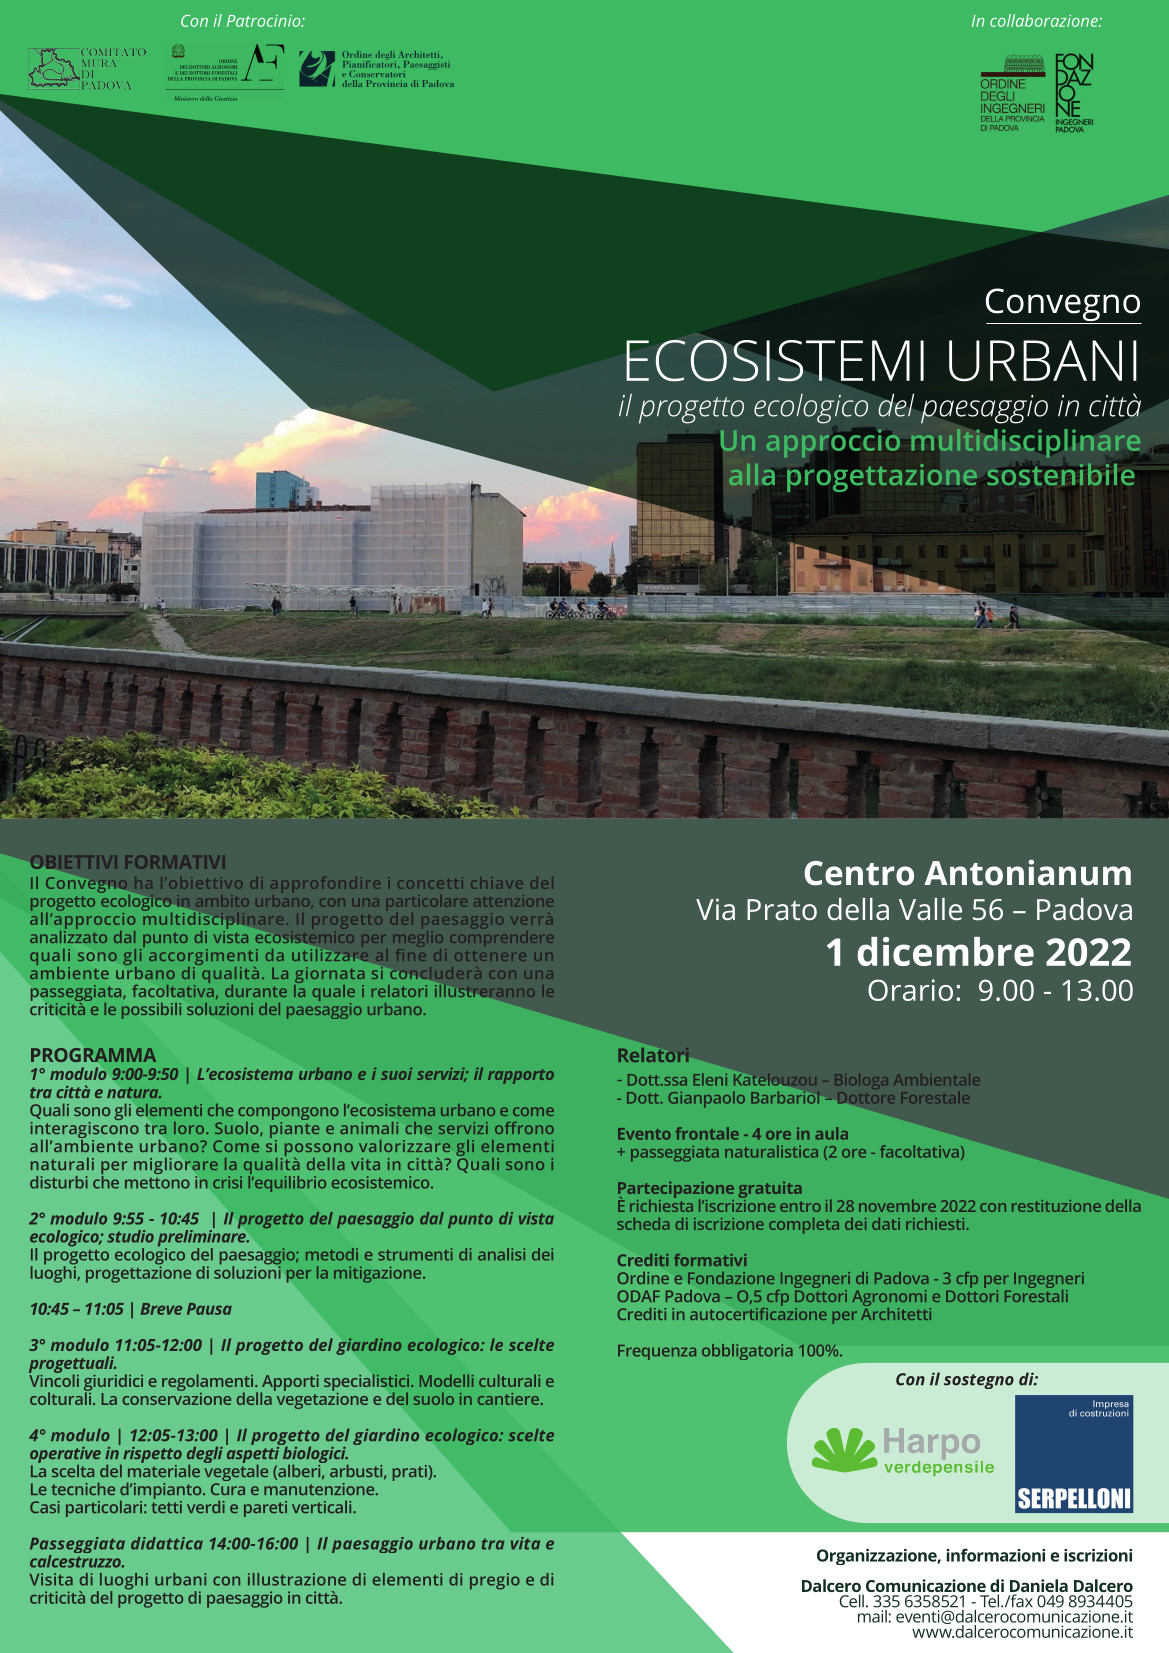 Ecosistemi Urbani 2022